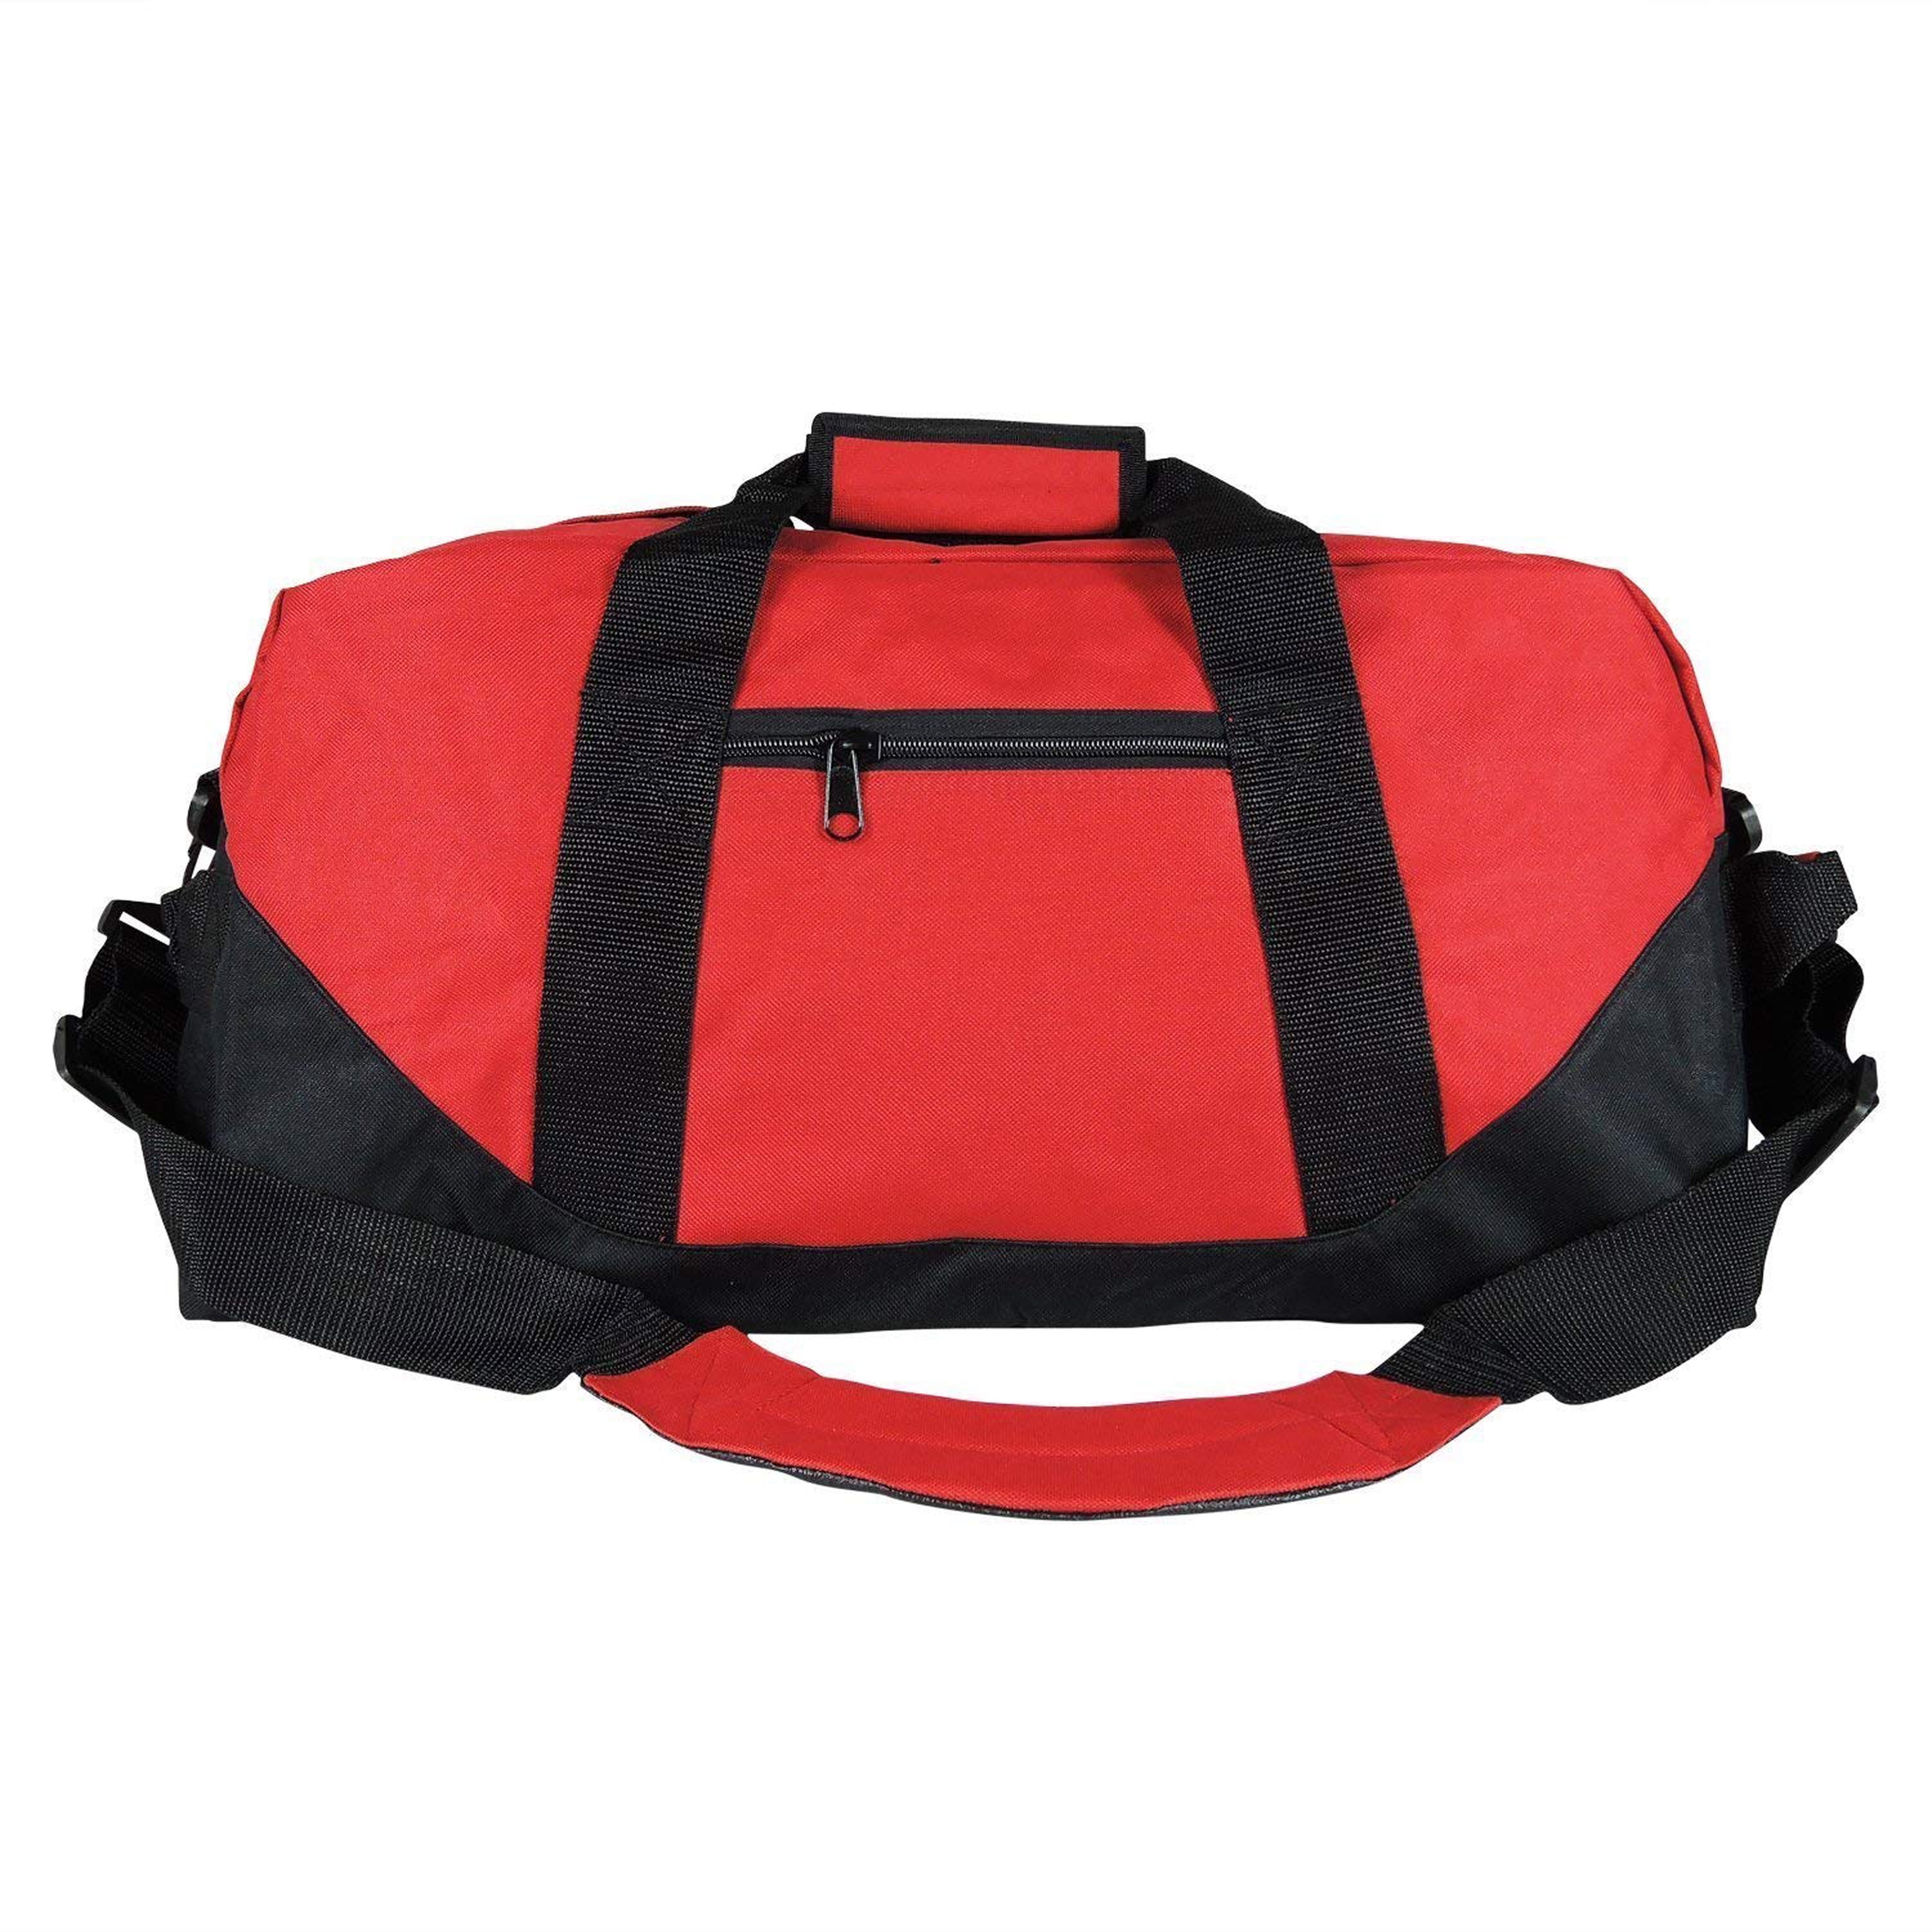 ImpecGear 21-inch 2-tone Duffle Bag - Red / Black - Walmart.com